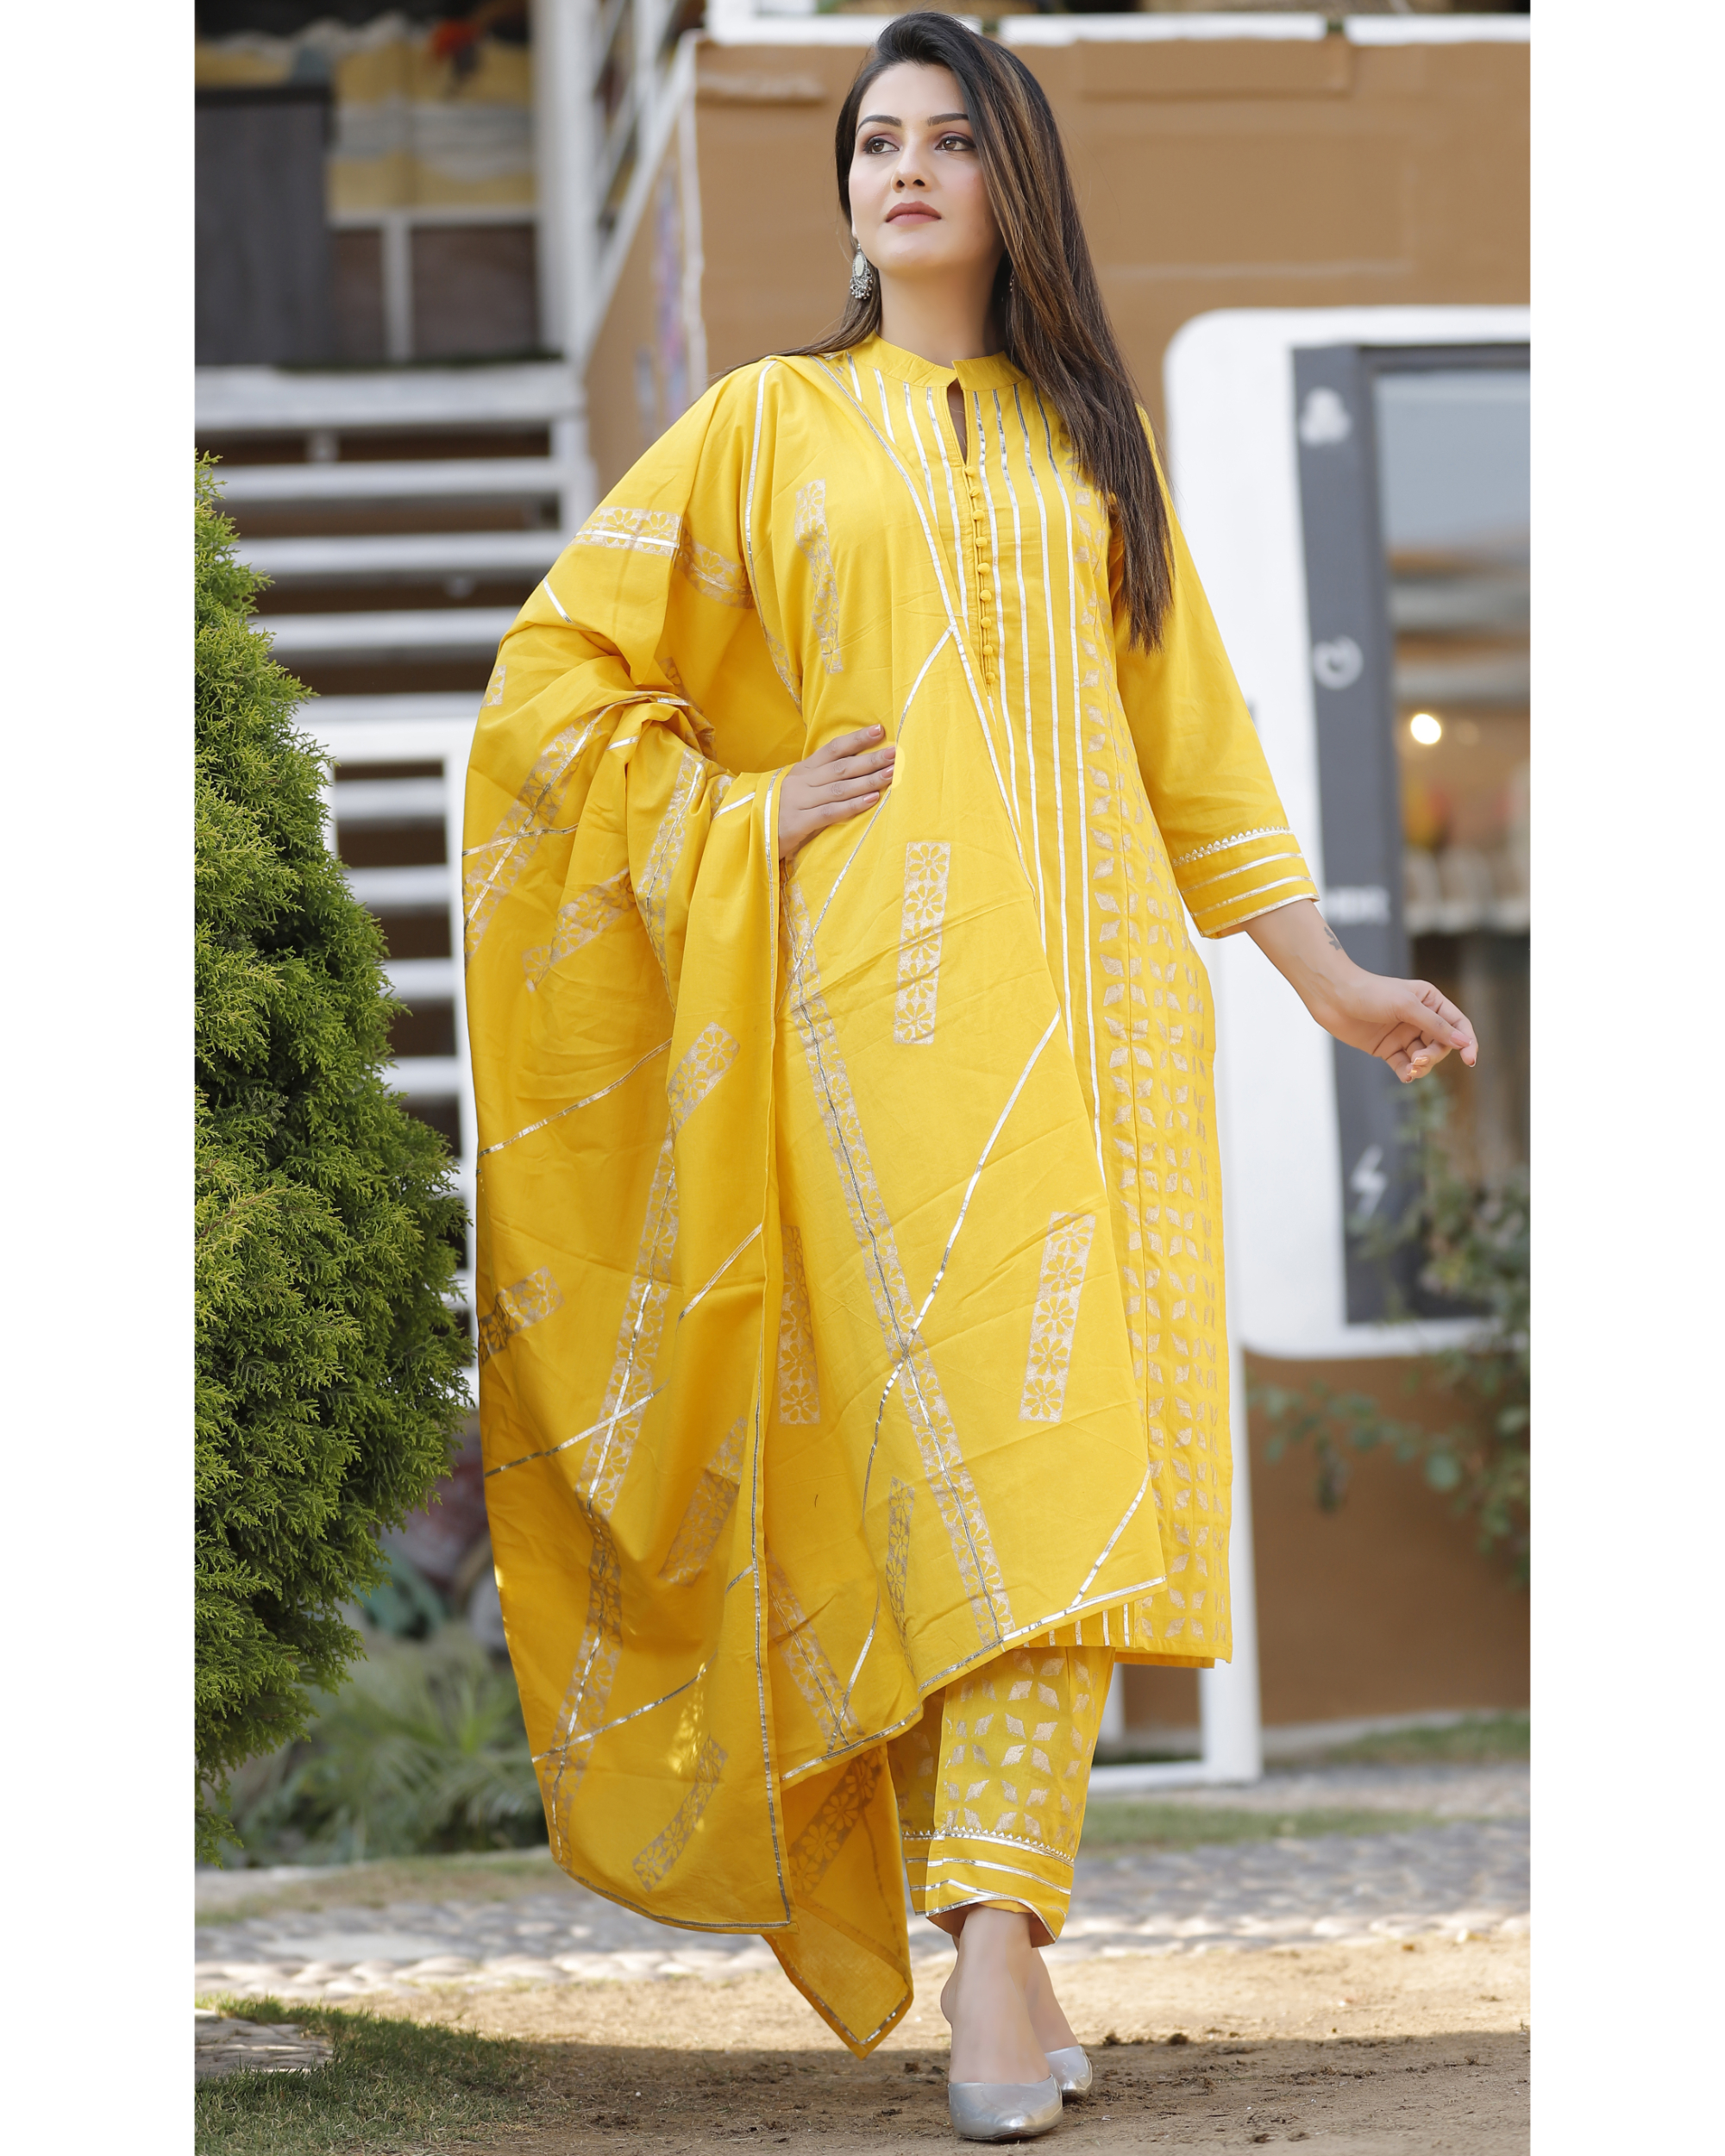 Yellow Gota Patti Kurtis Online Shopping for Women at Low Prices